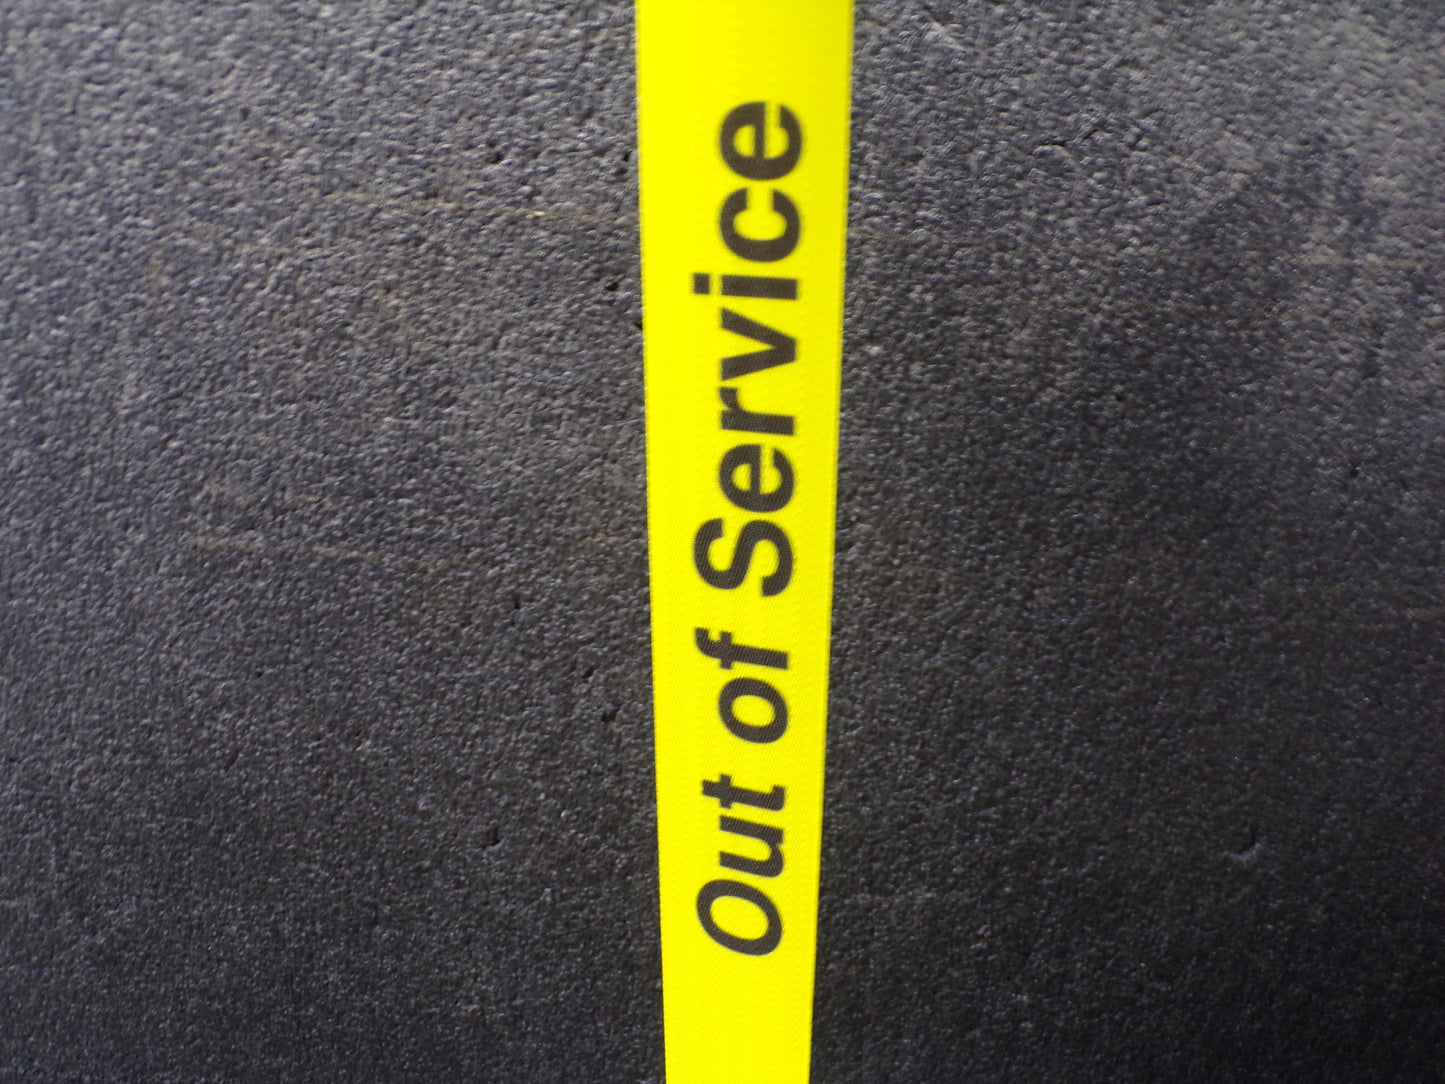 TENSABARRIER Retractable Belt Barrier, Yellow Belt With Black Writing, Out of Service (CR00072-BT23)